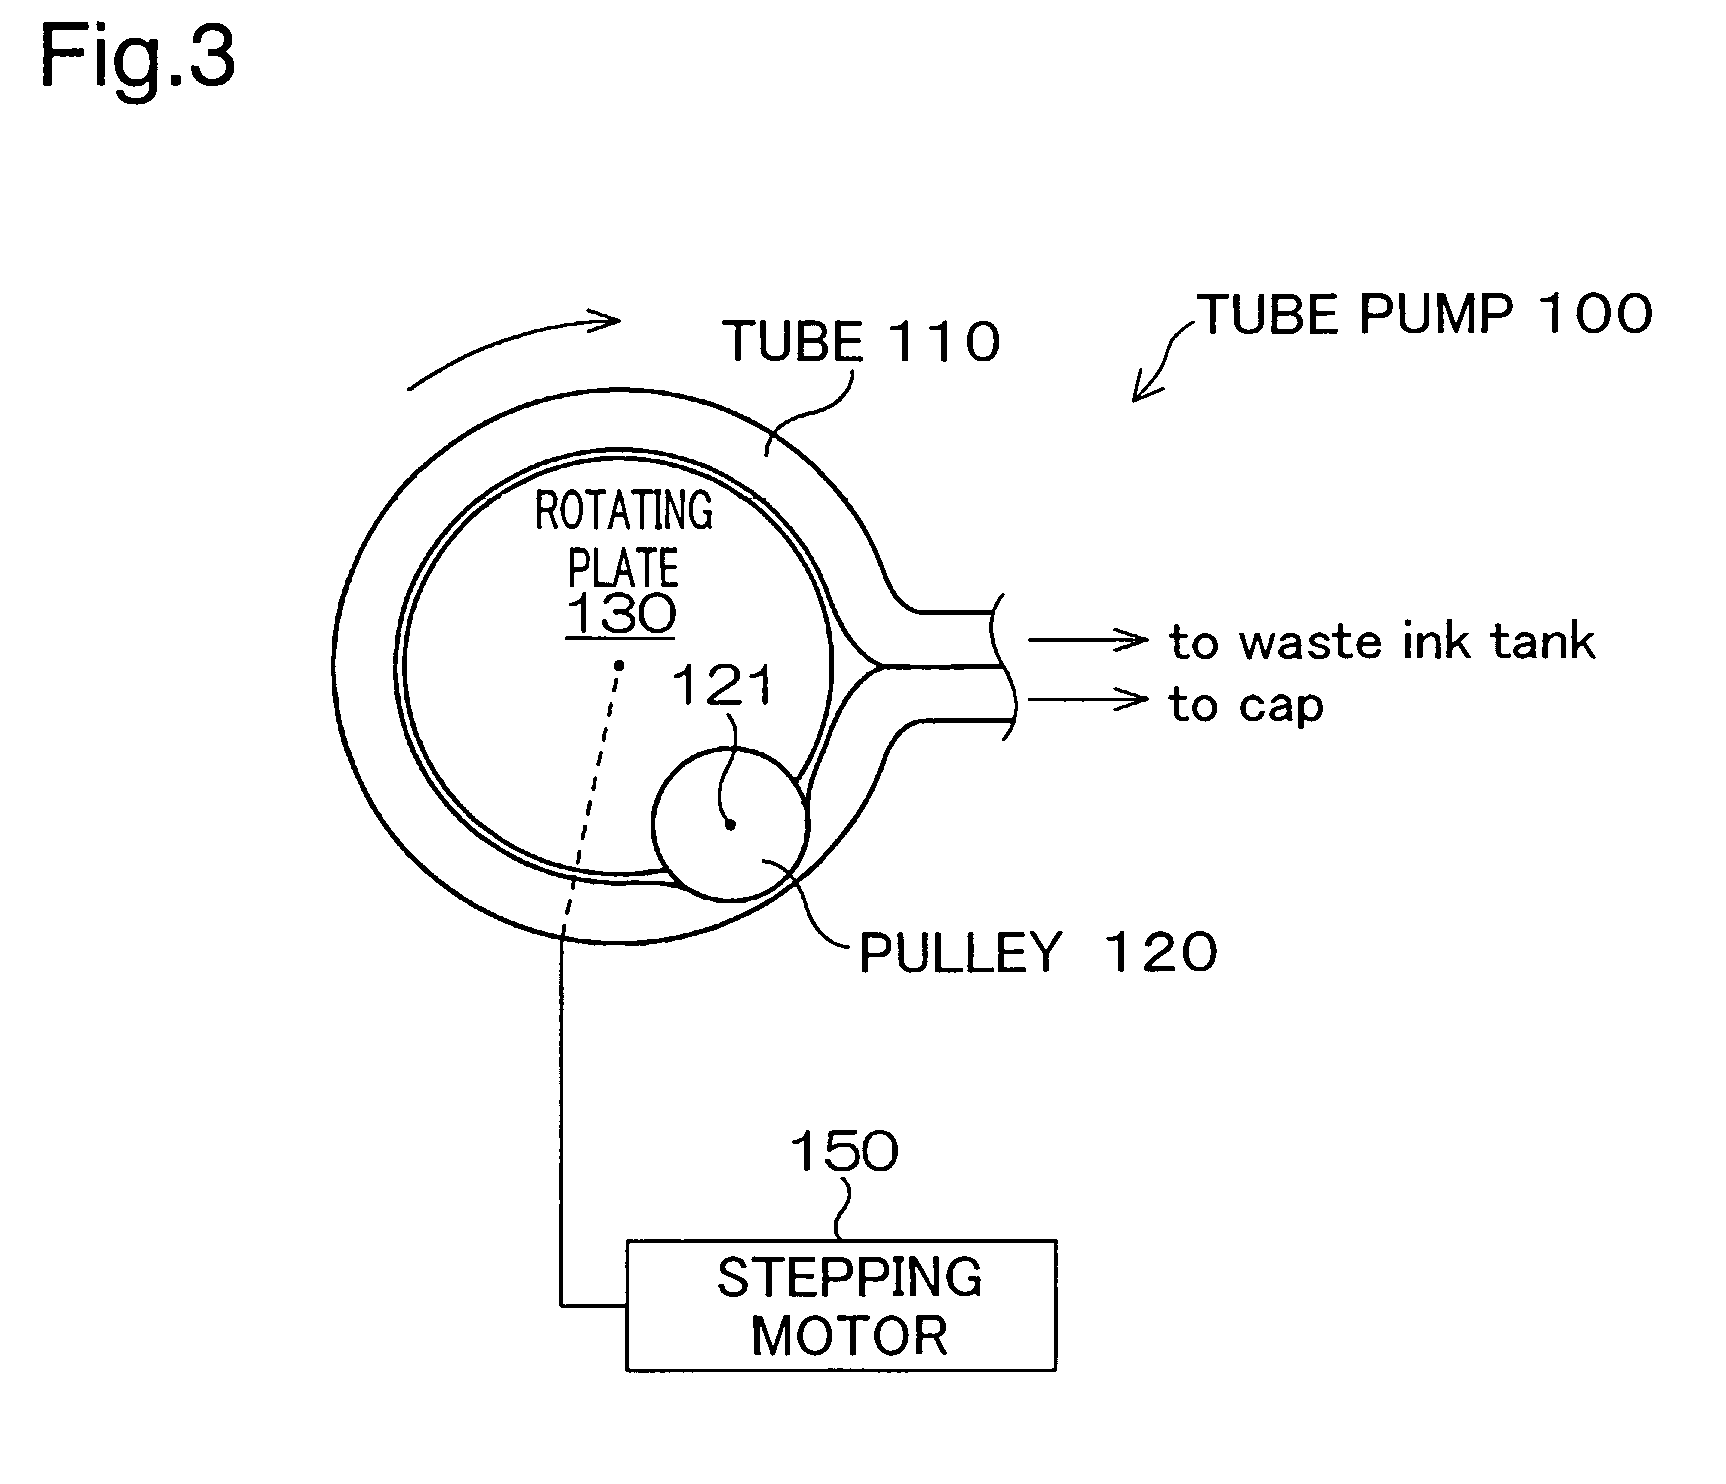 Tube and tube pump